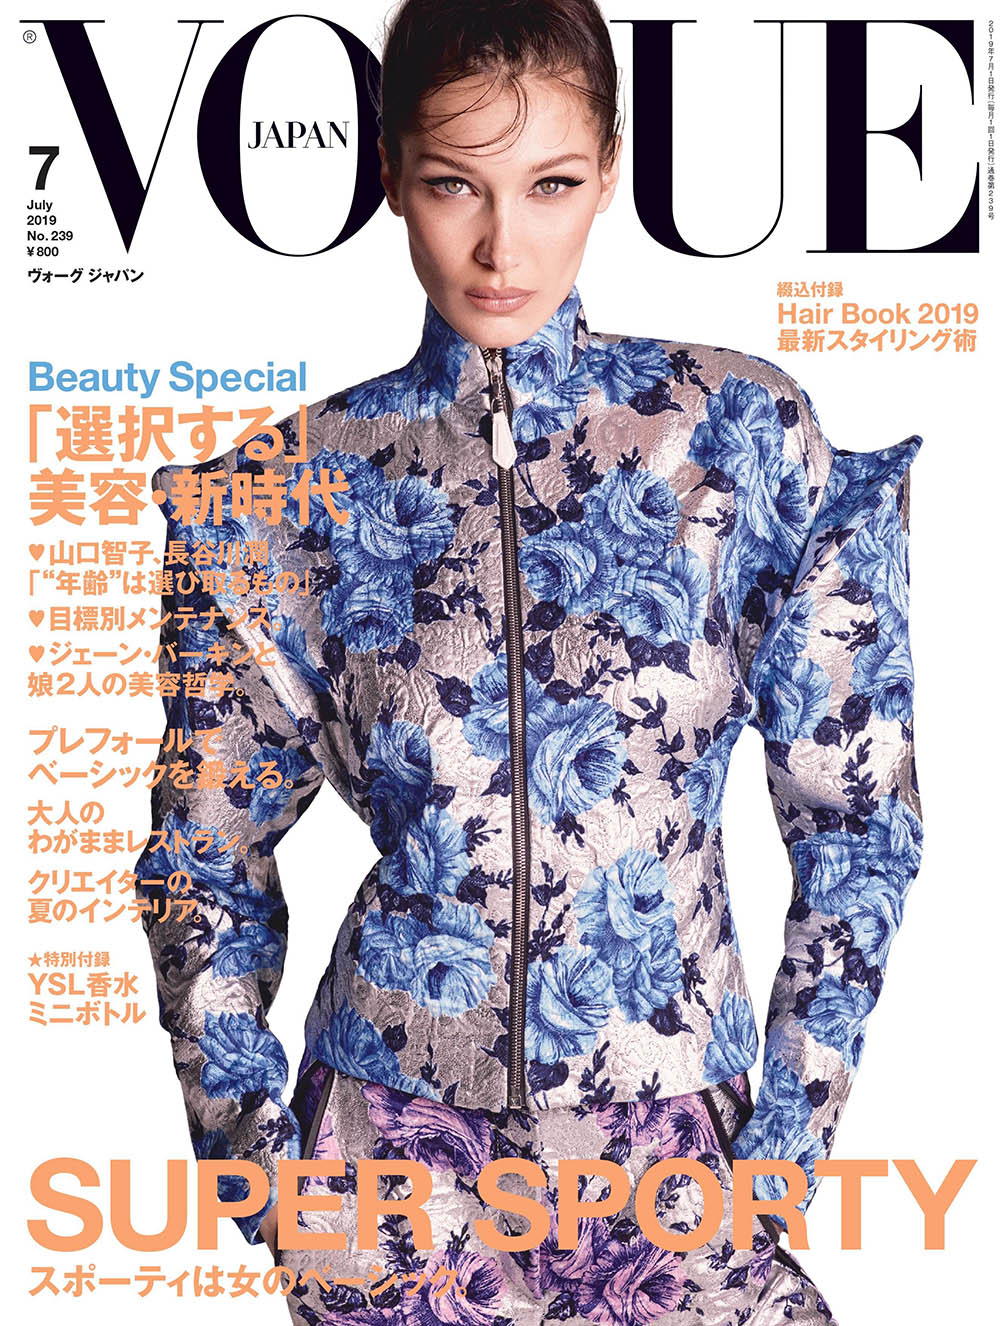 Bella Hadid covers Vogue Japan July 2019 by Luigi & Iango